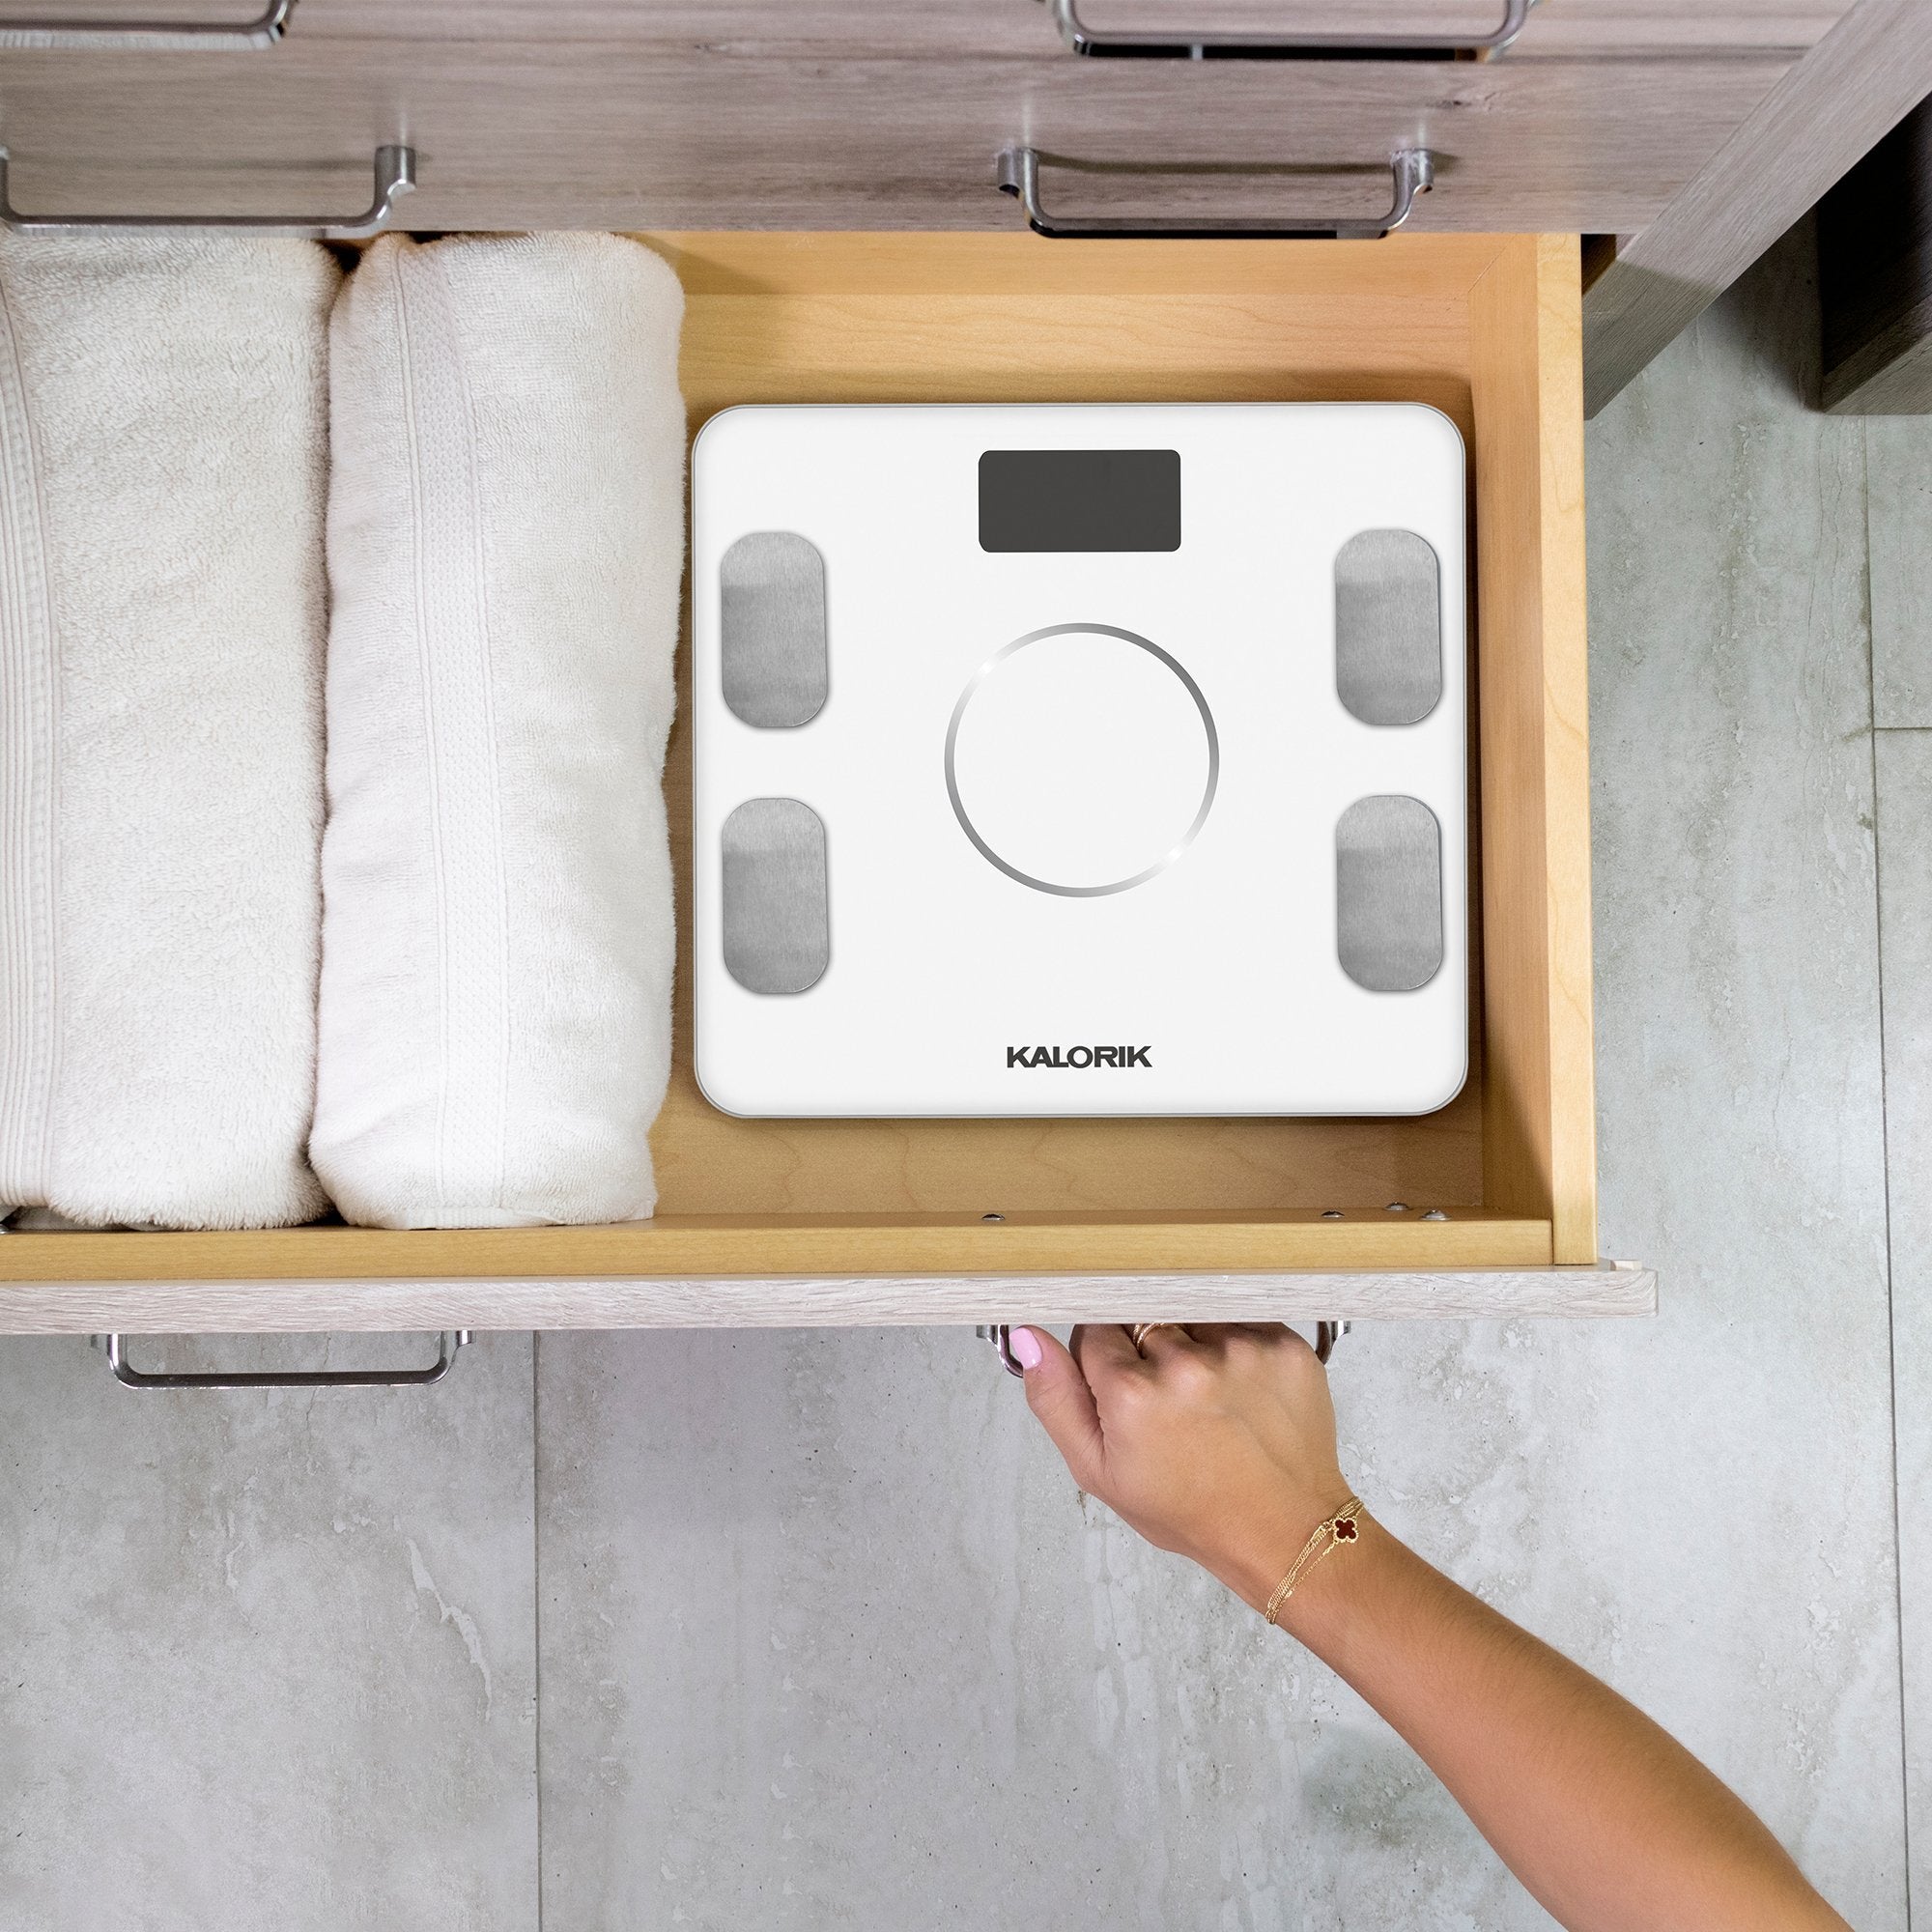 Kalorik Home Smart Electronic Body Analysis Scale, White